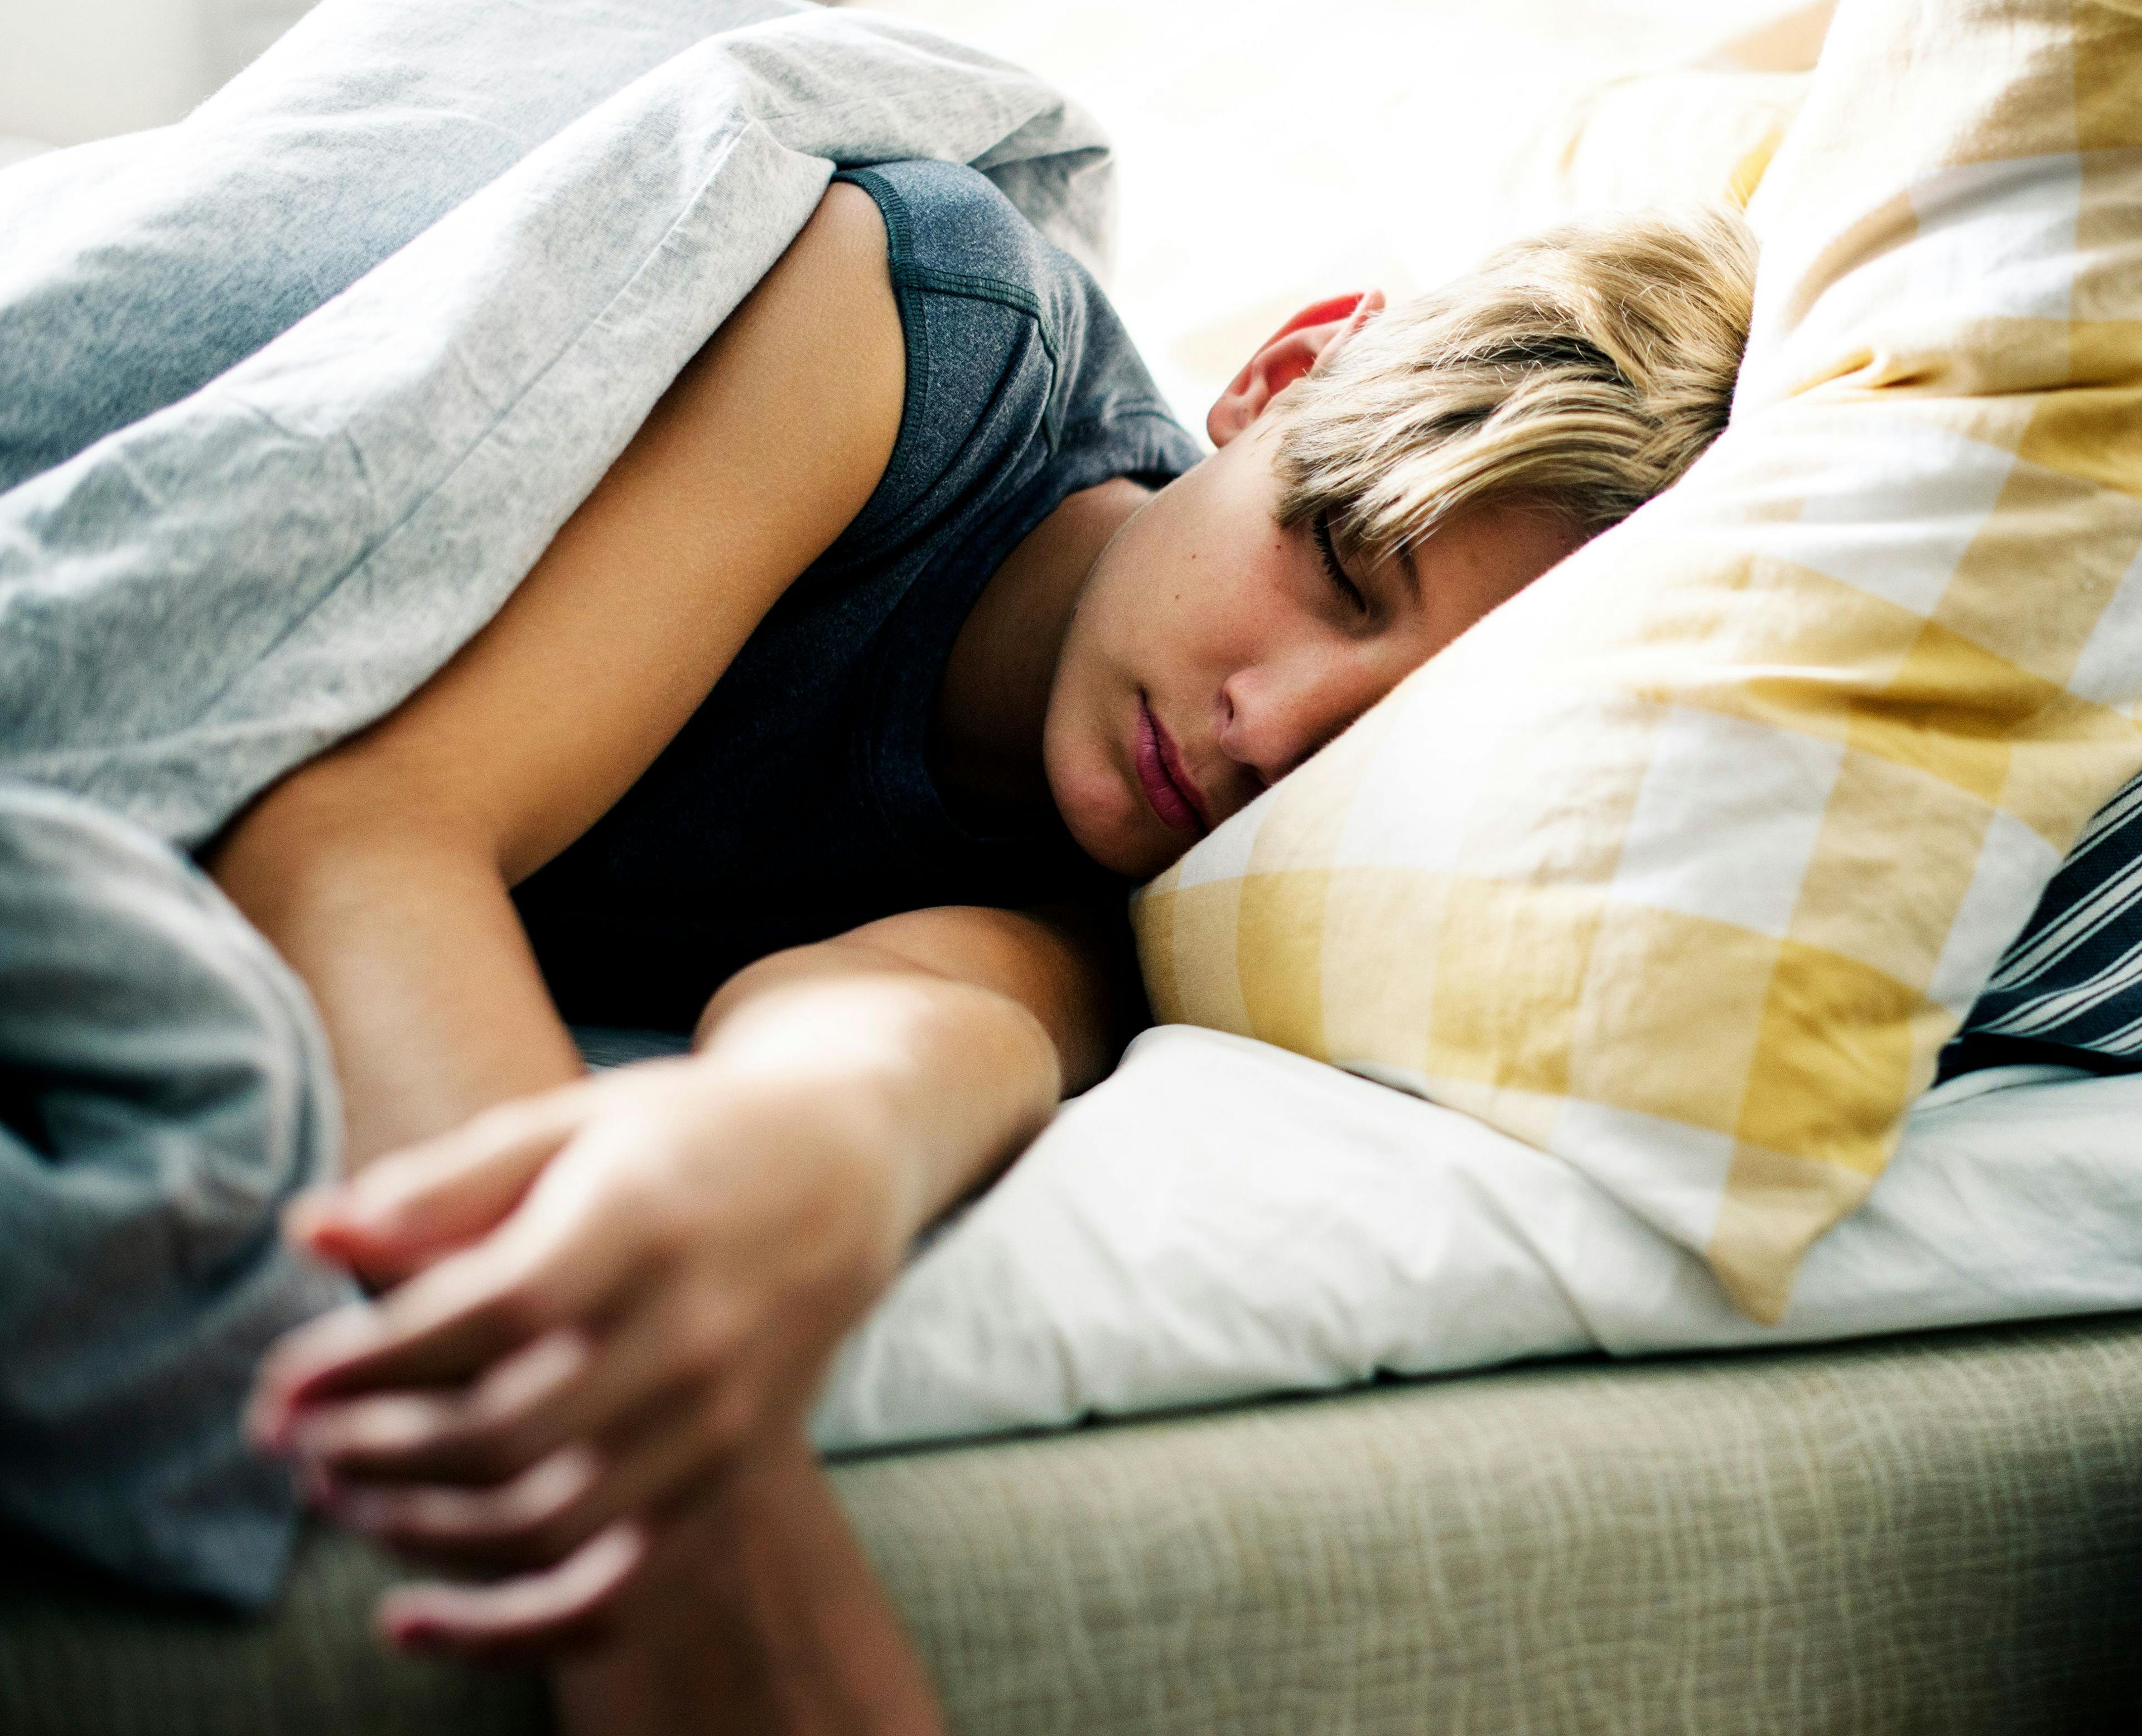 Teenager sleeping | Image credit: Rawpixel.com - stock.adobe.com